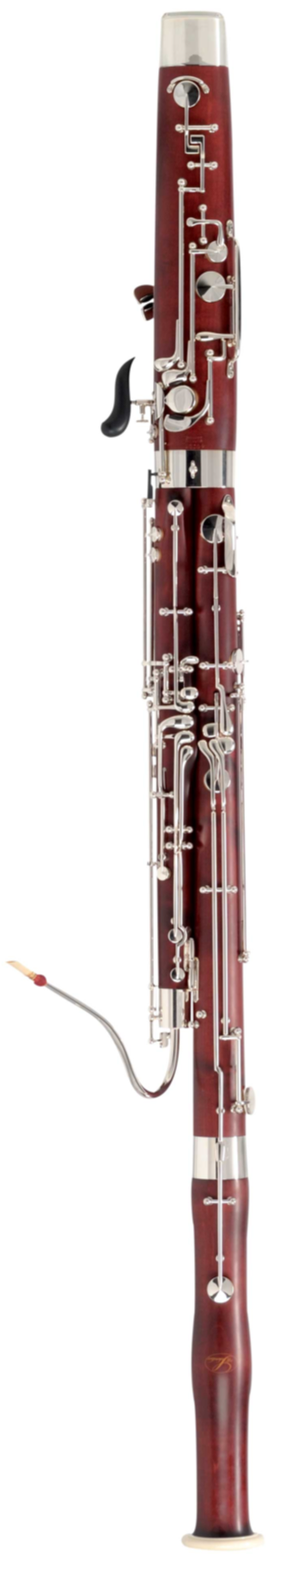 Schreiber Model S91 Professional Bassoon